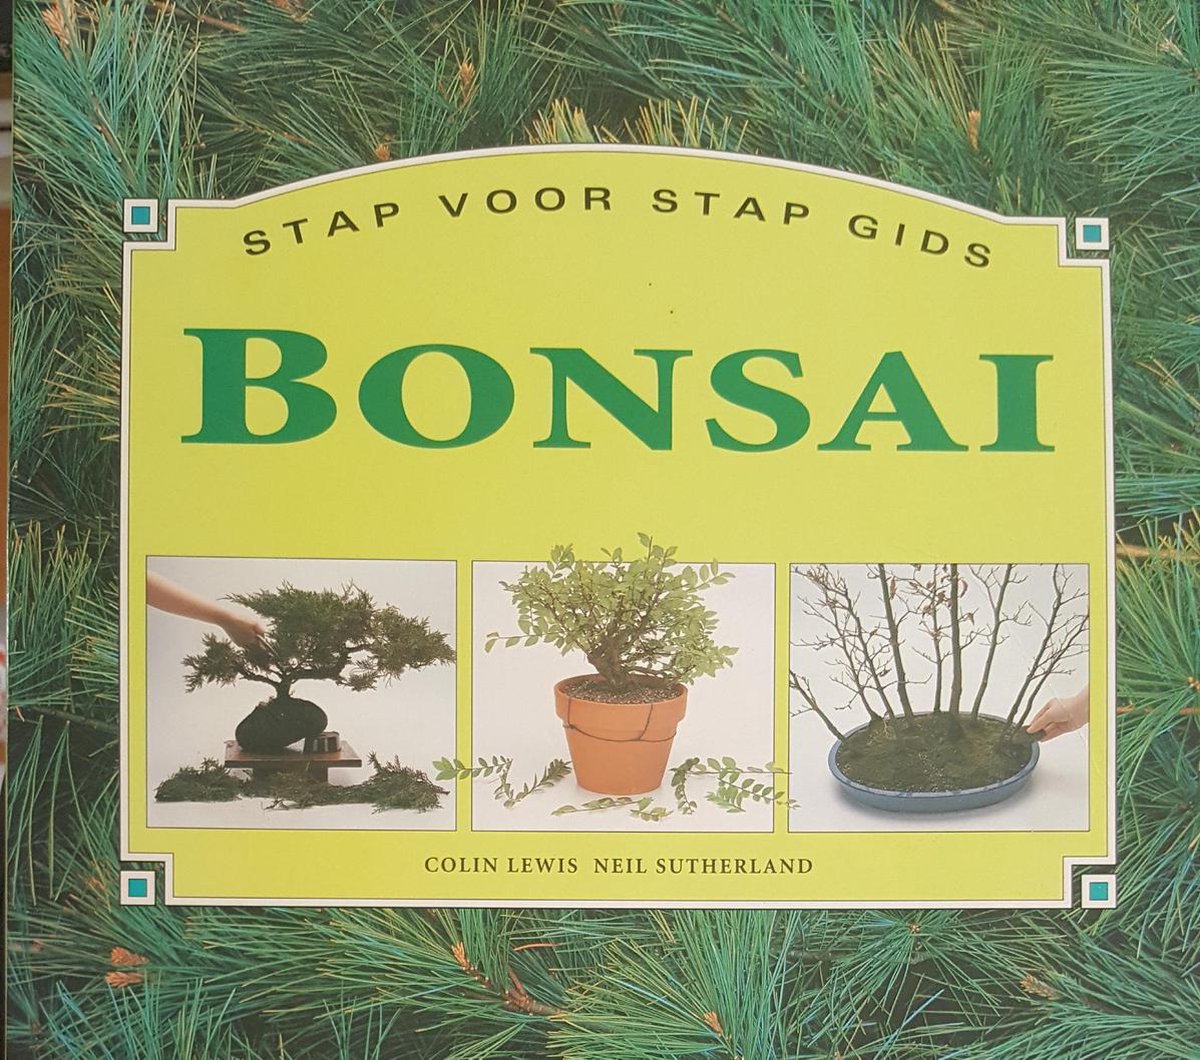 BONSAI(STAP VOOR STAP GIDS)